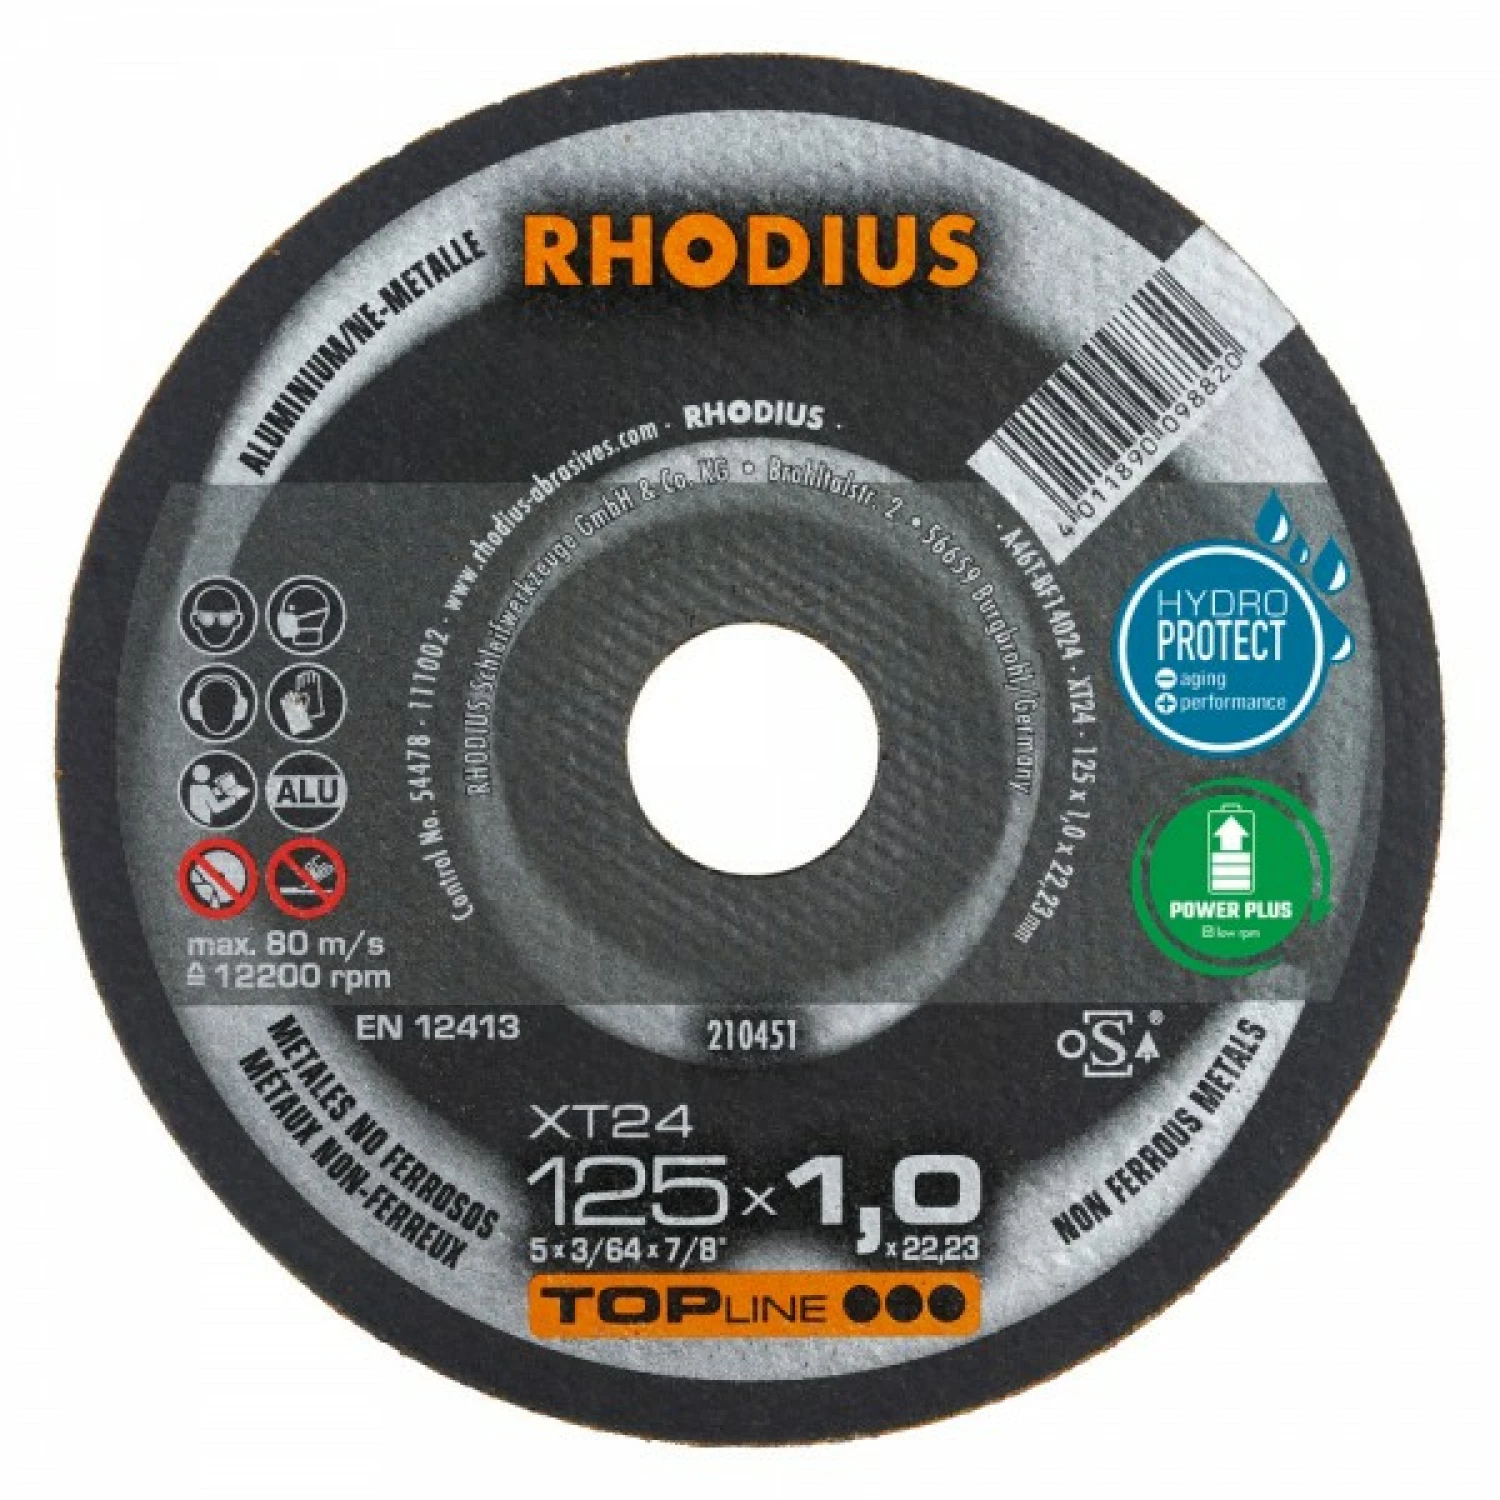 Rhodius 210451 XT24 TOPline lll Disque à tronçonner extra fin 125 x 22,23 x 1,0mm (50 pcs)-image